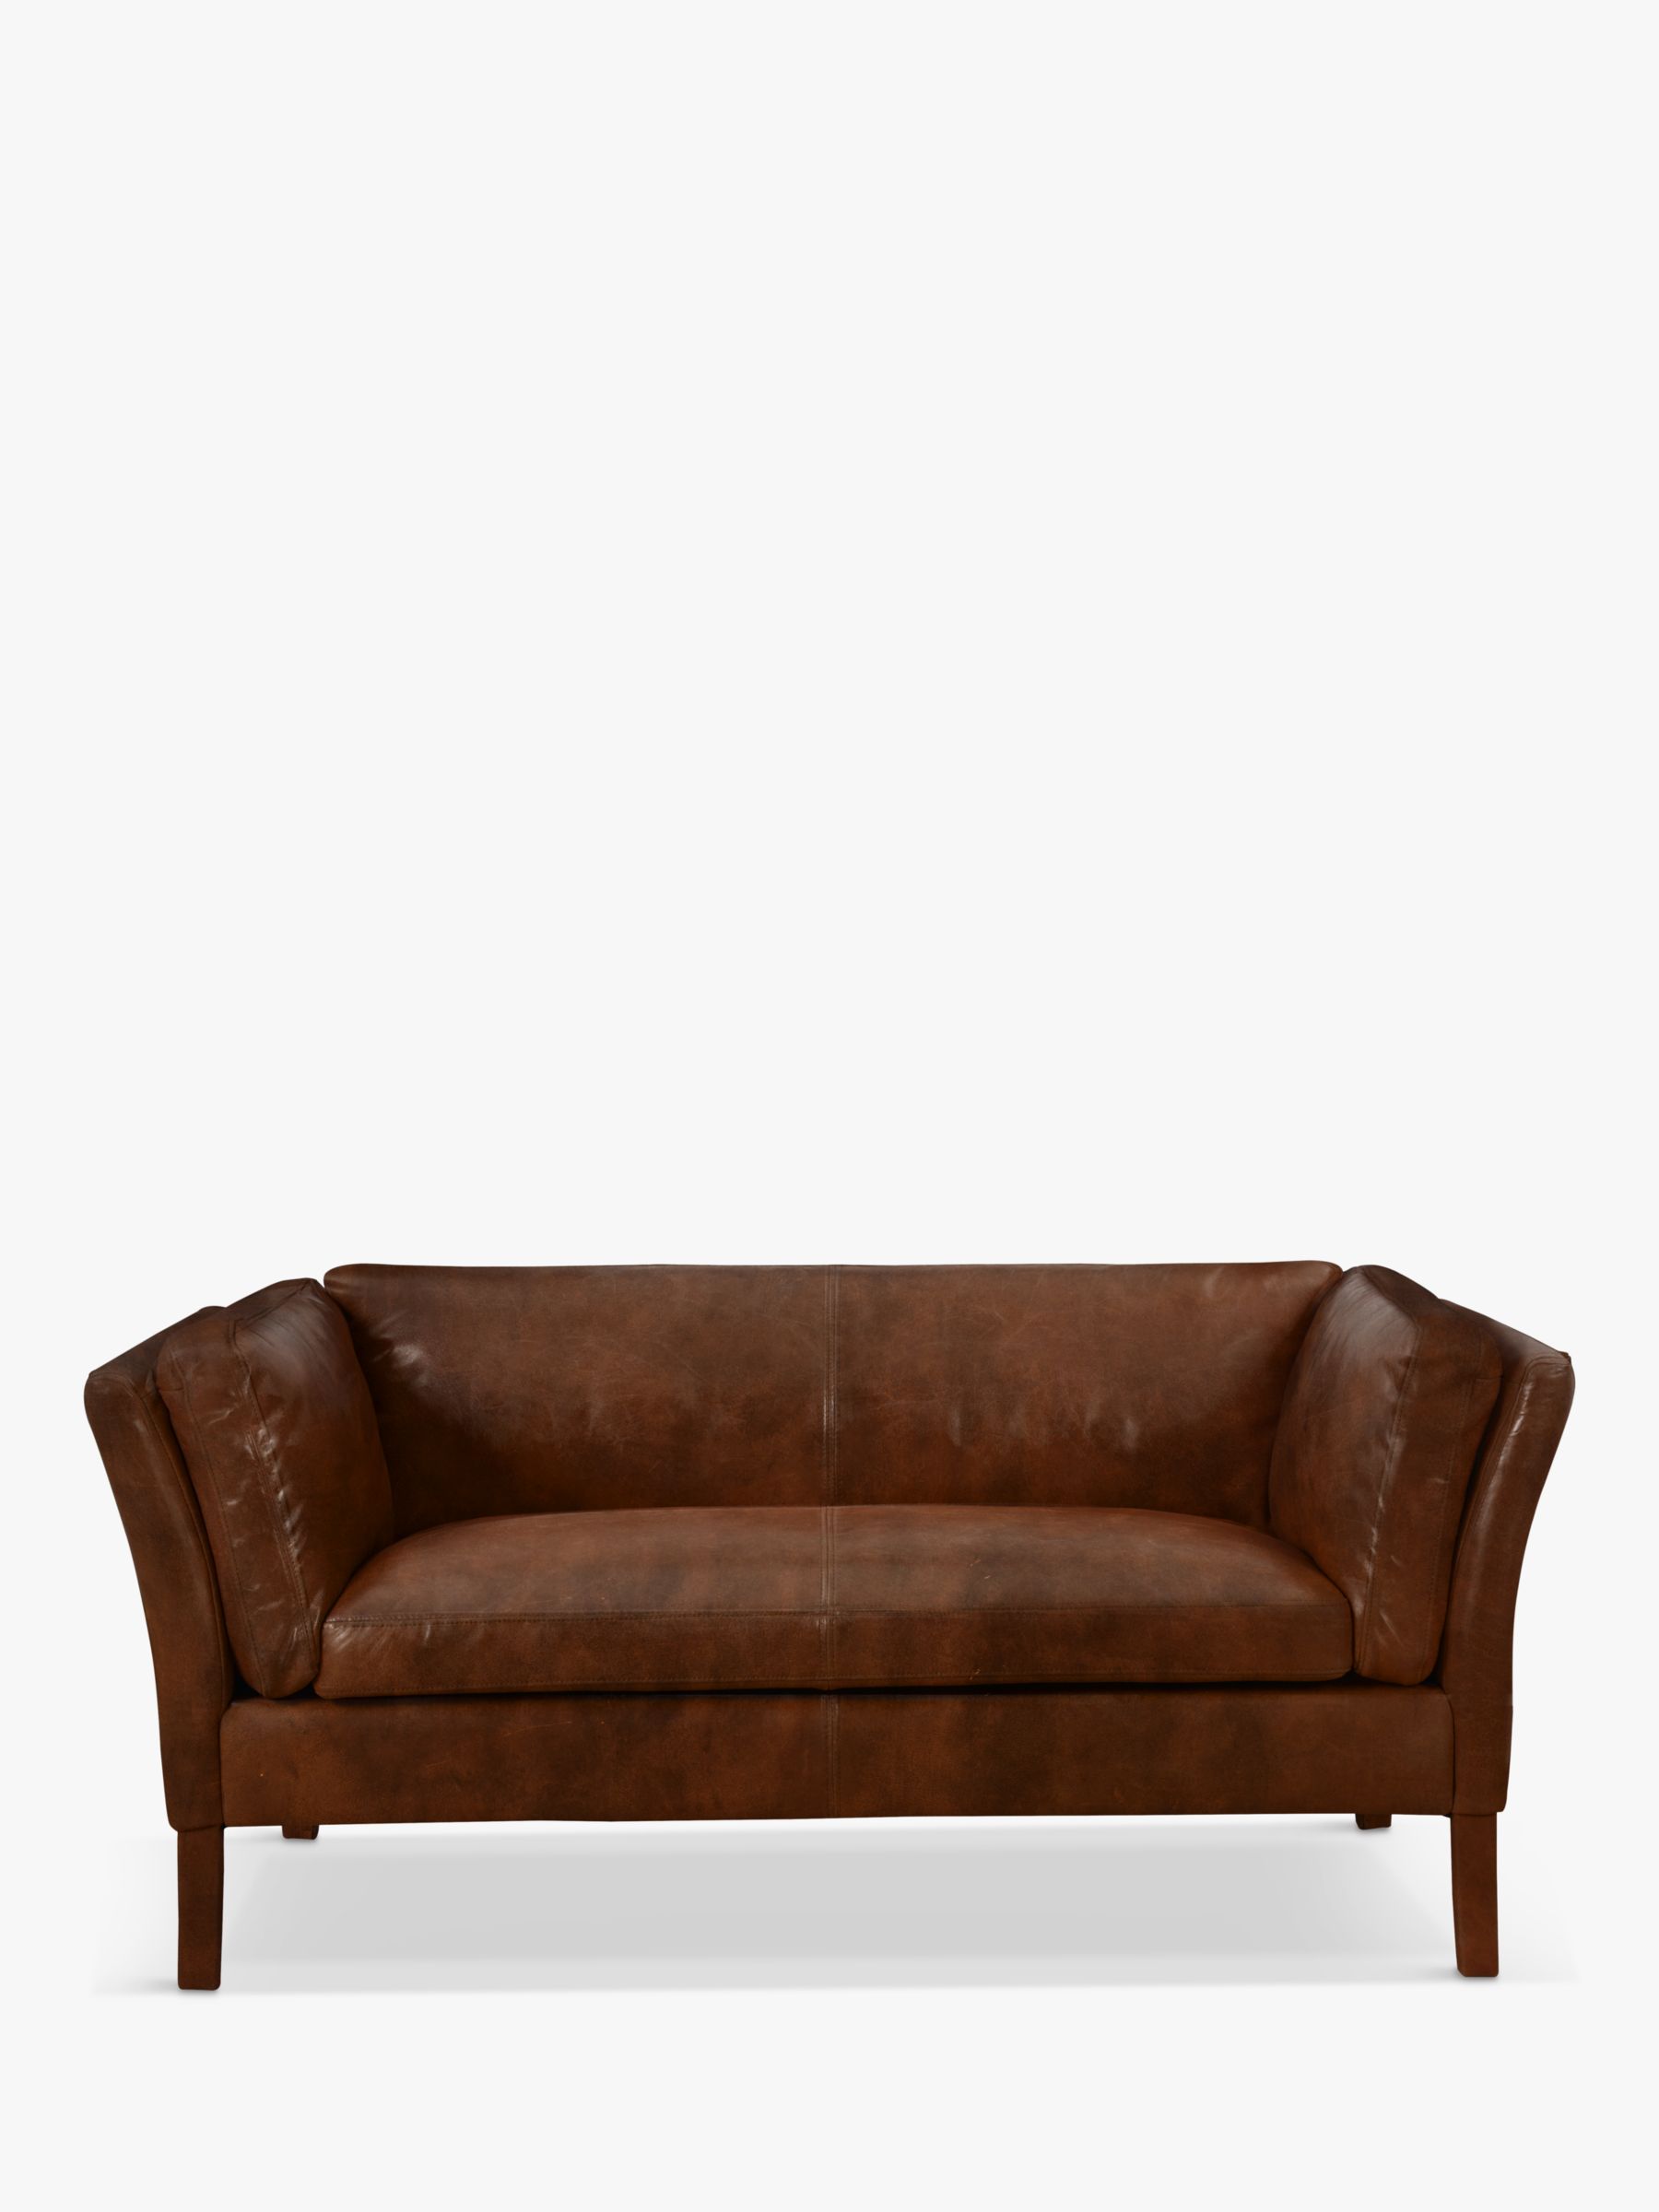 Photo of Halo groucho small 2 seater leather sofa dark leg london leather